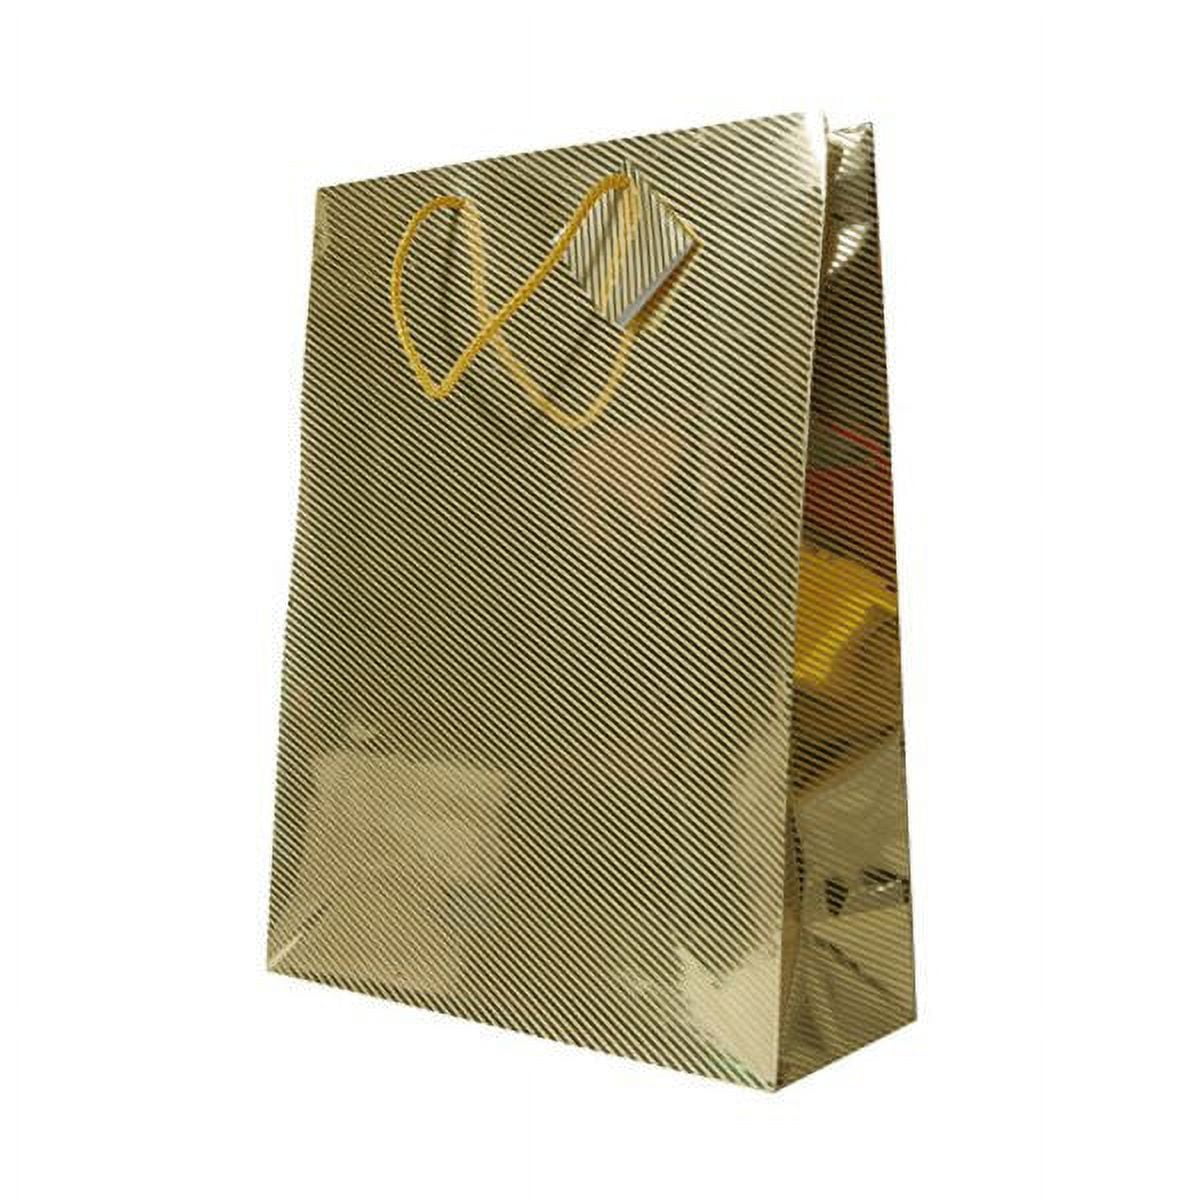 UNIQOOO 12Pcs Metallic Gold Christmas Gift Bags Bulk with 12